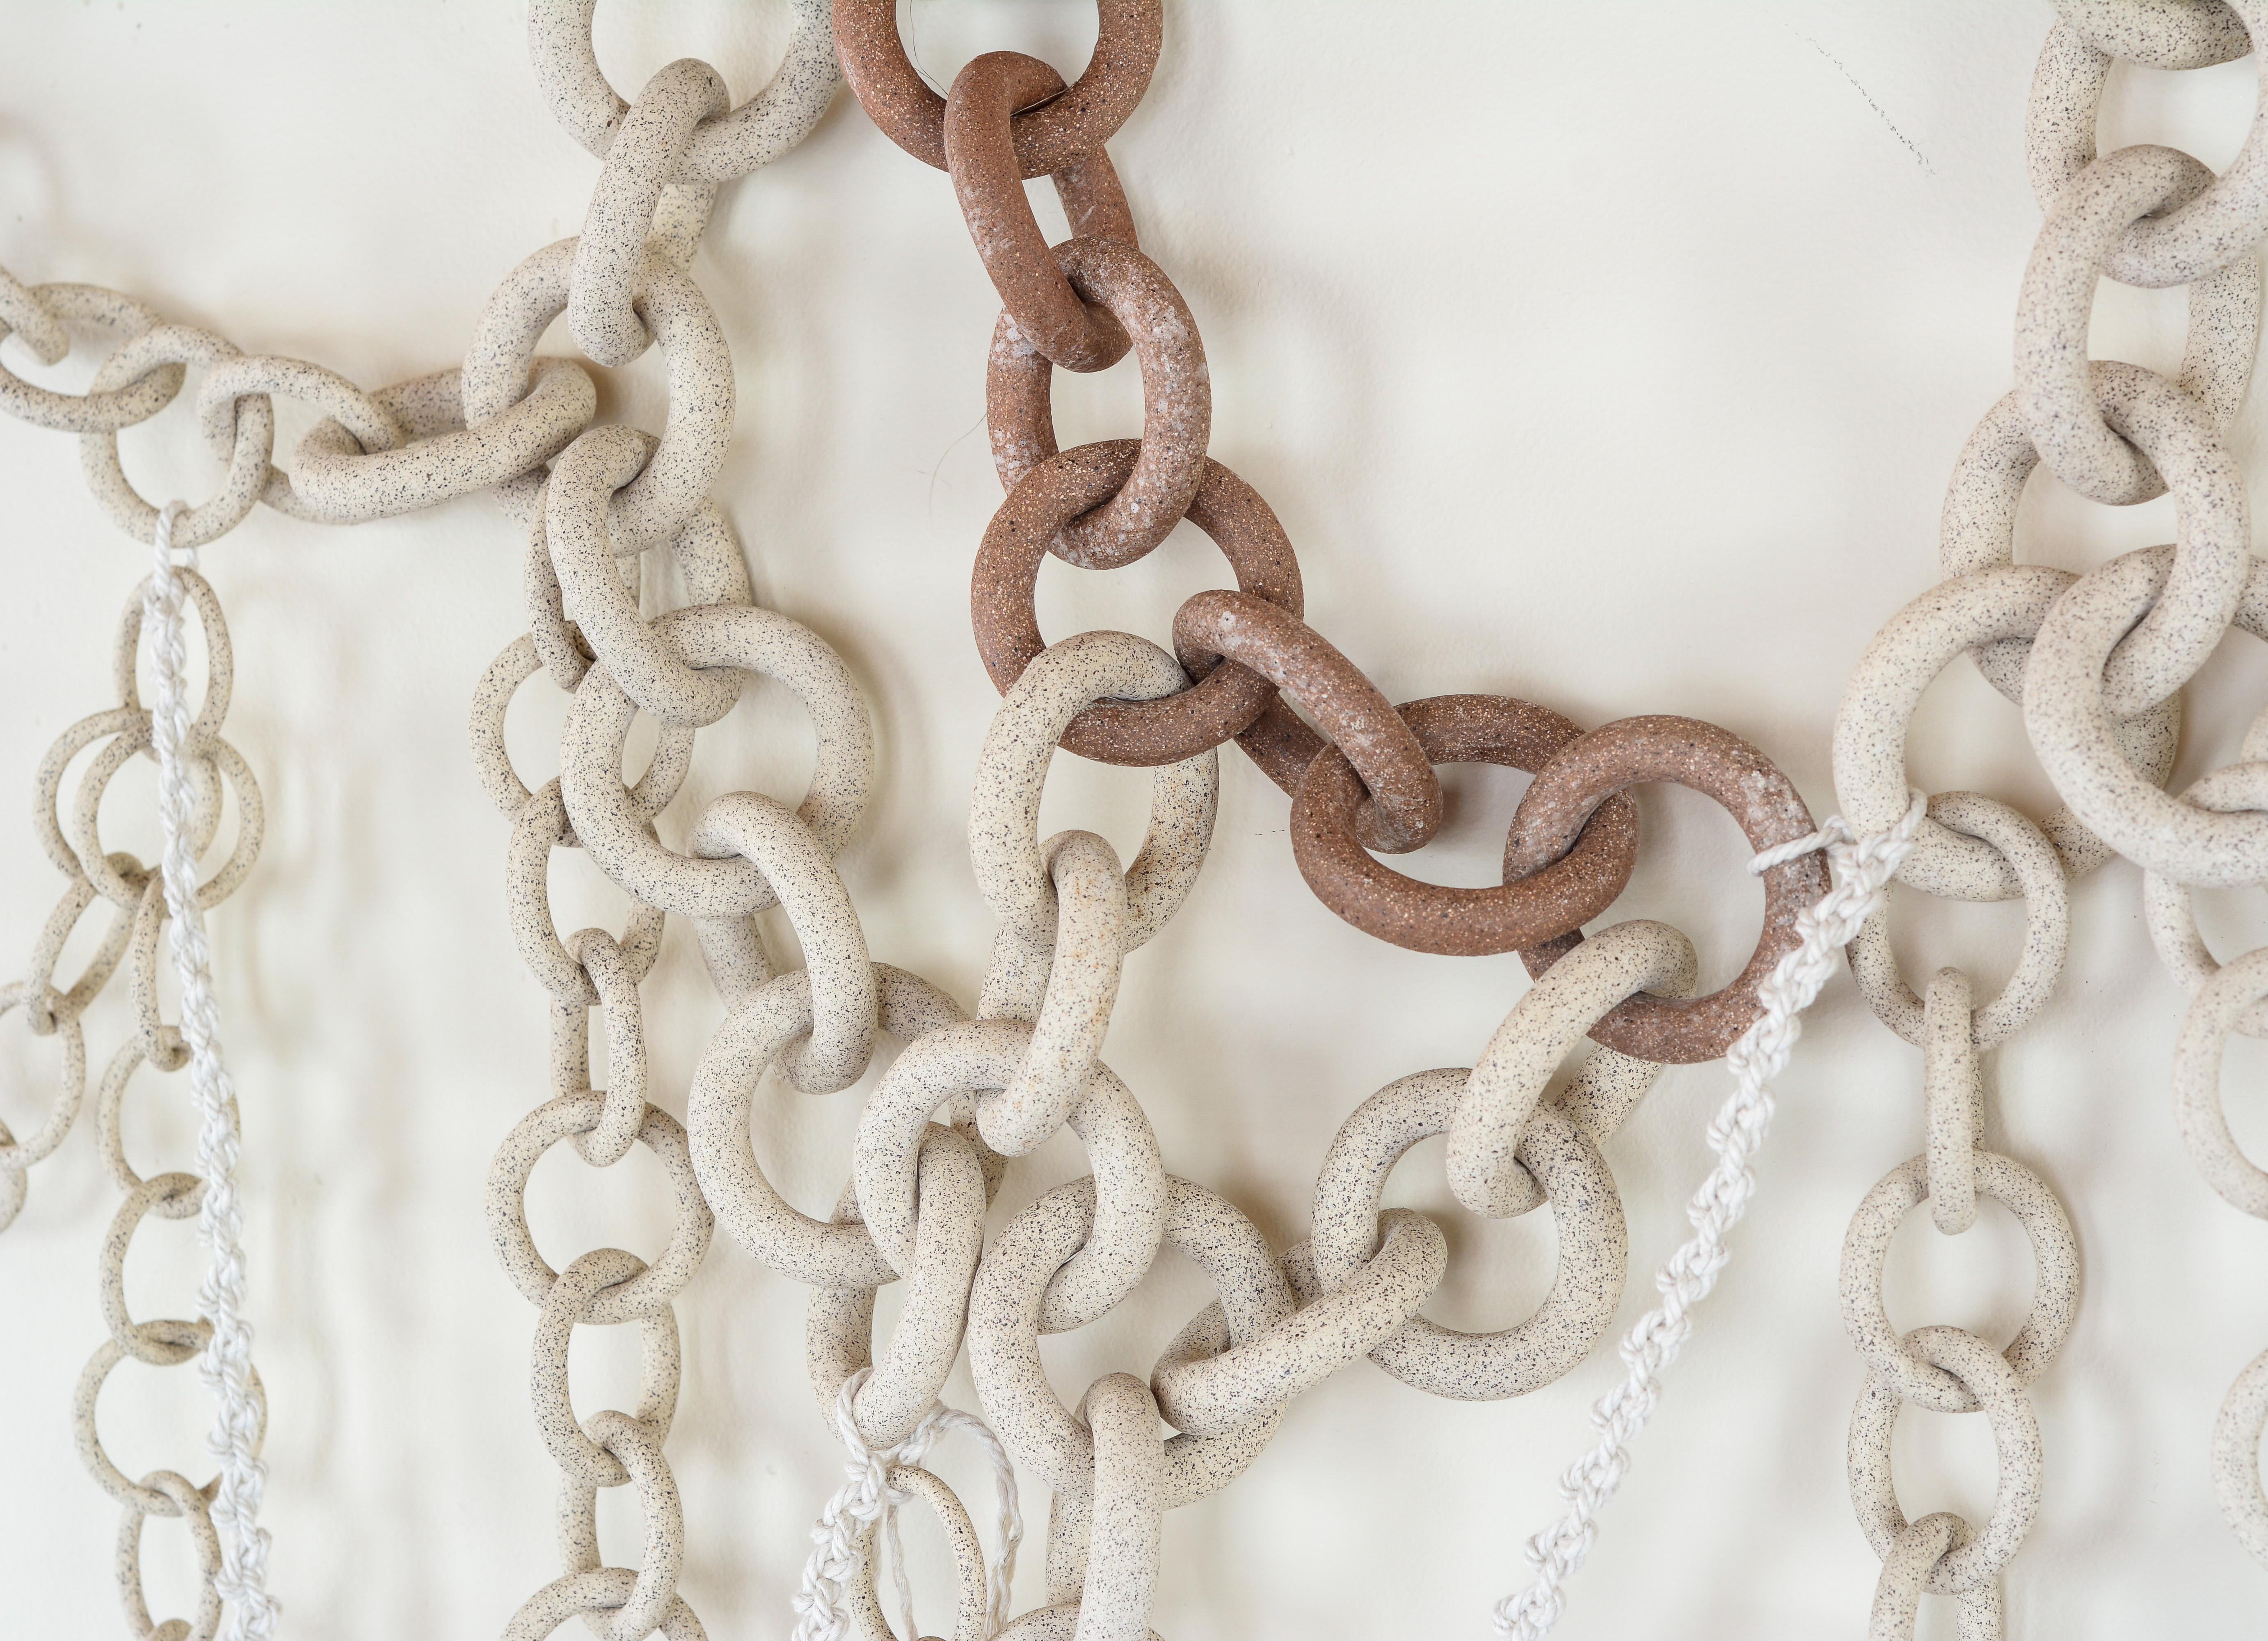 Ceramic Link Chain Wall Sculpture 2